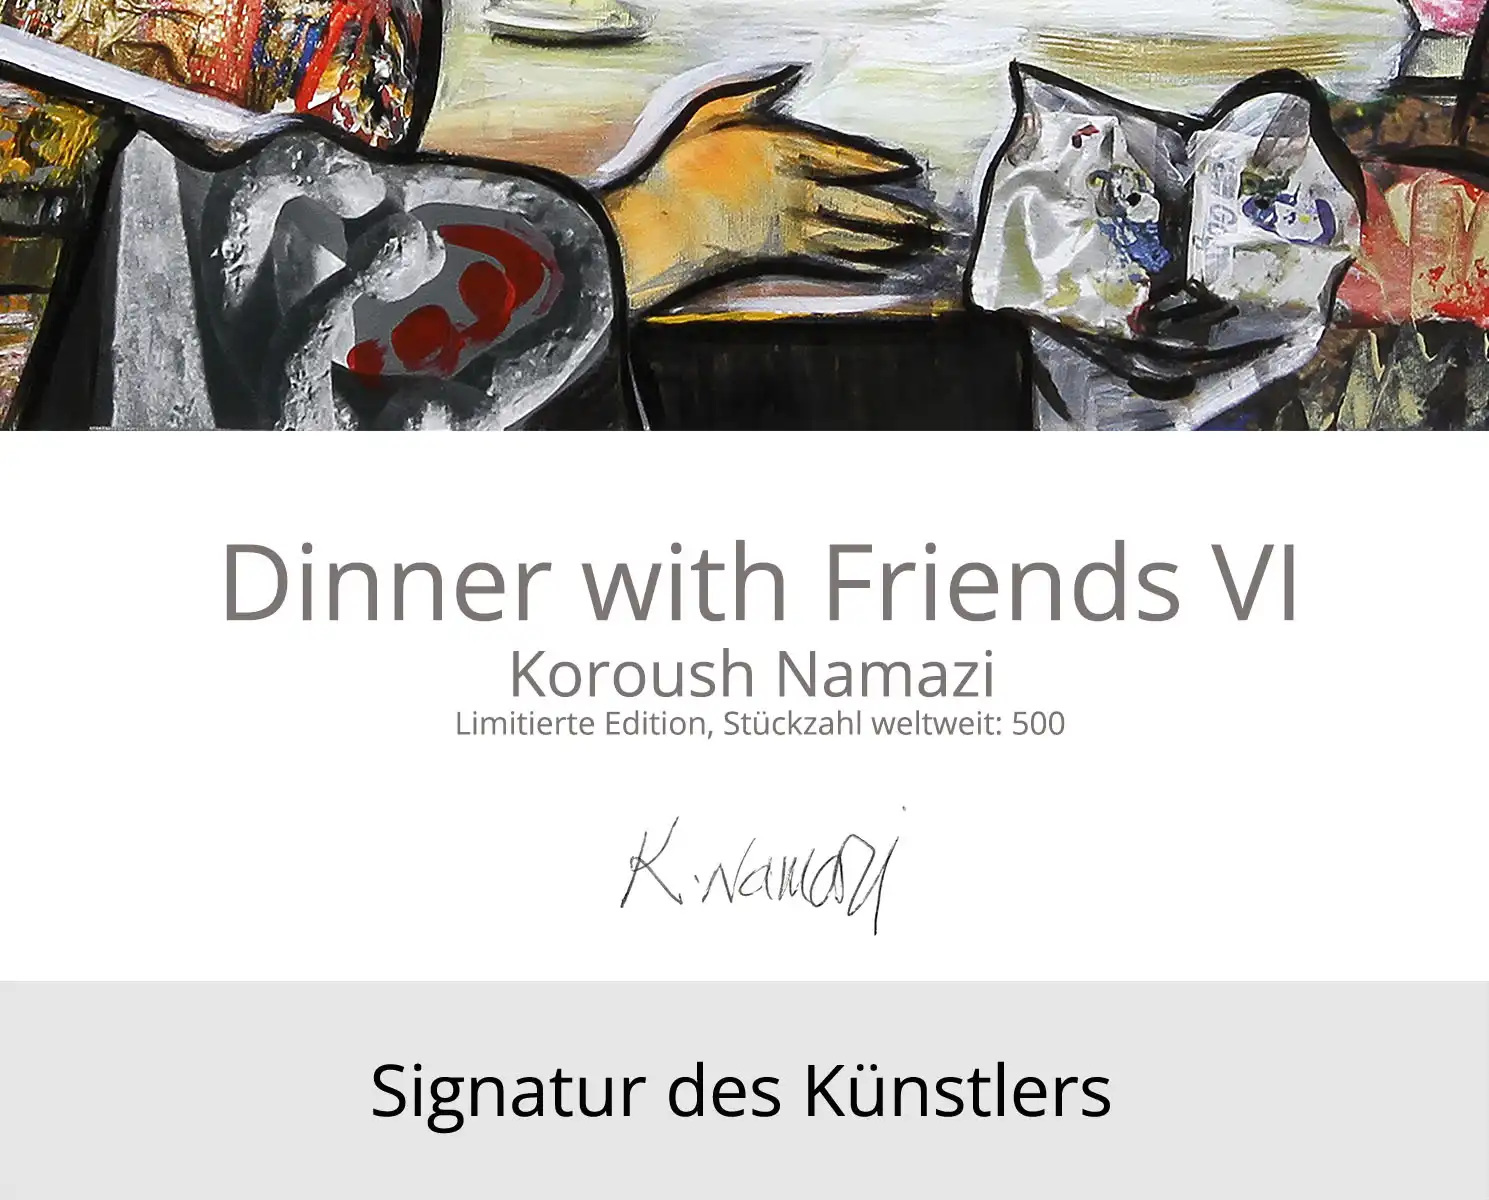 Limitierte Edition auf Papier, K. Namazi: "Dinner with Friends VI", Fineartprint, Kollektion E&K